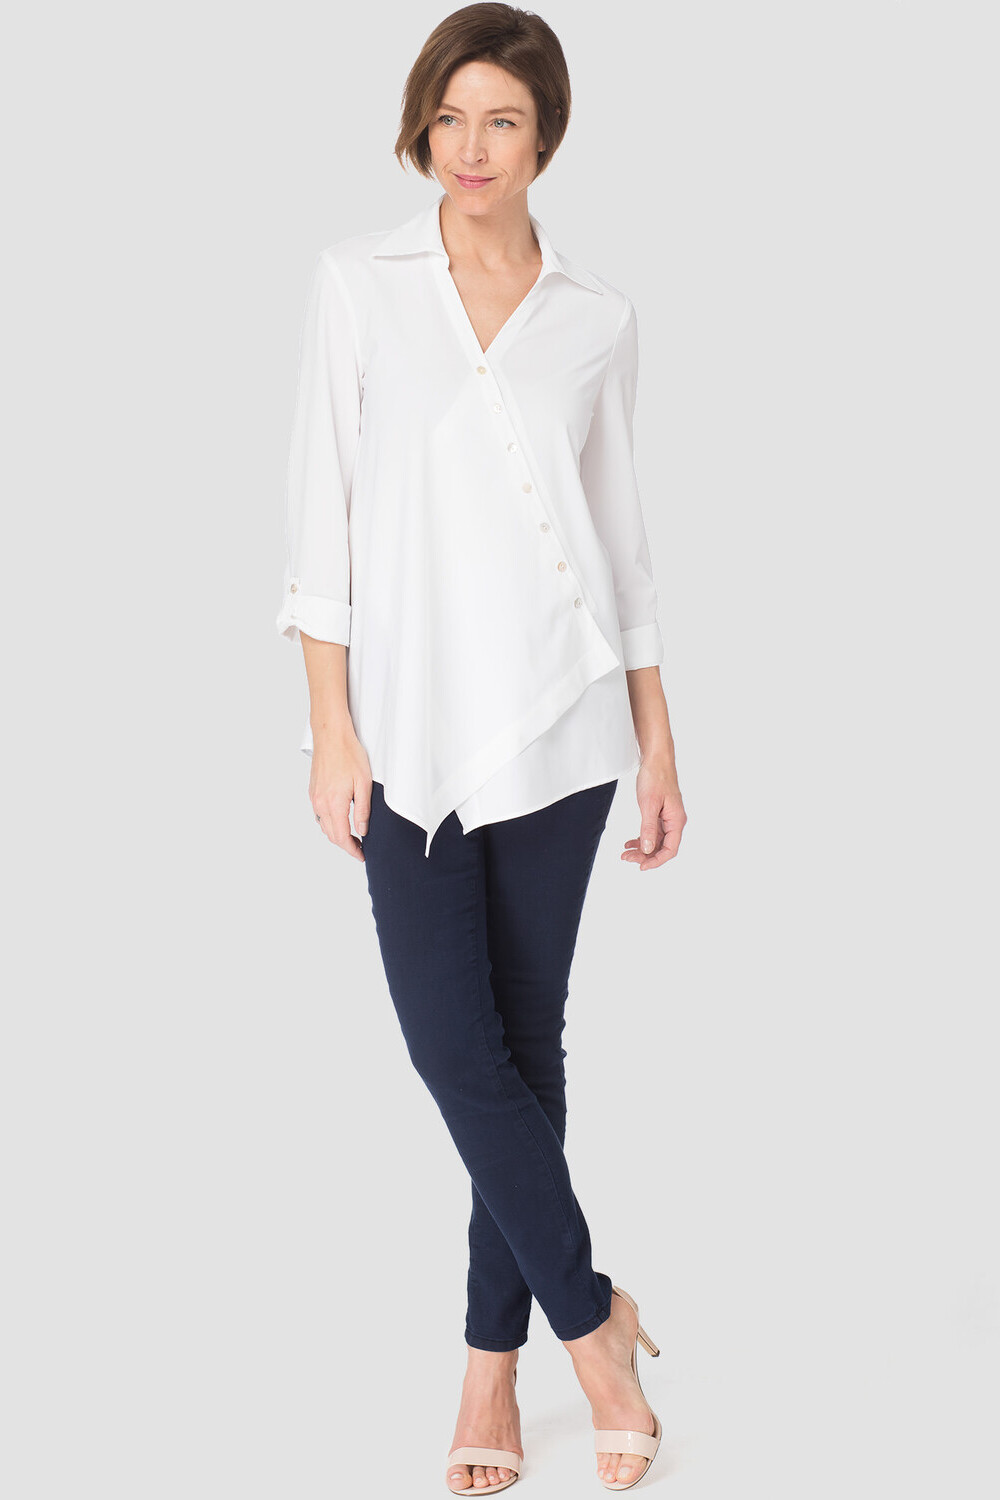 Joseph Ribkoff blouse style 181428. Blanc